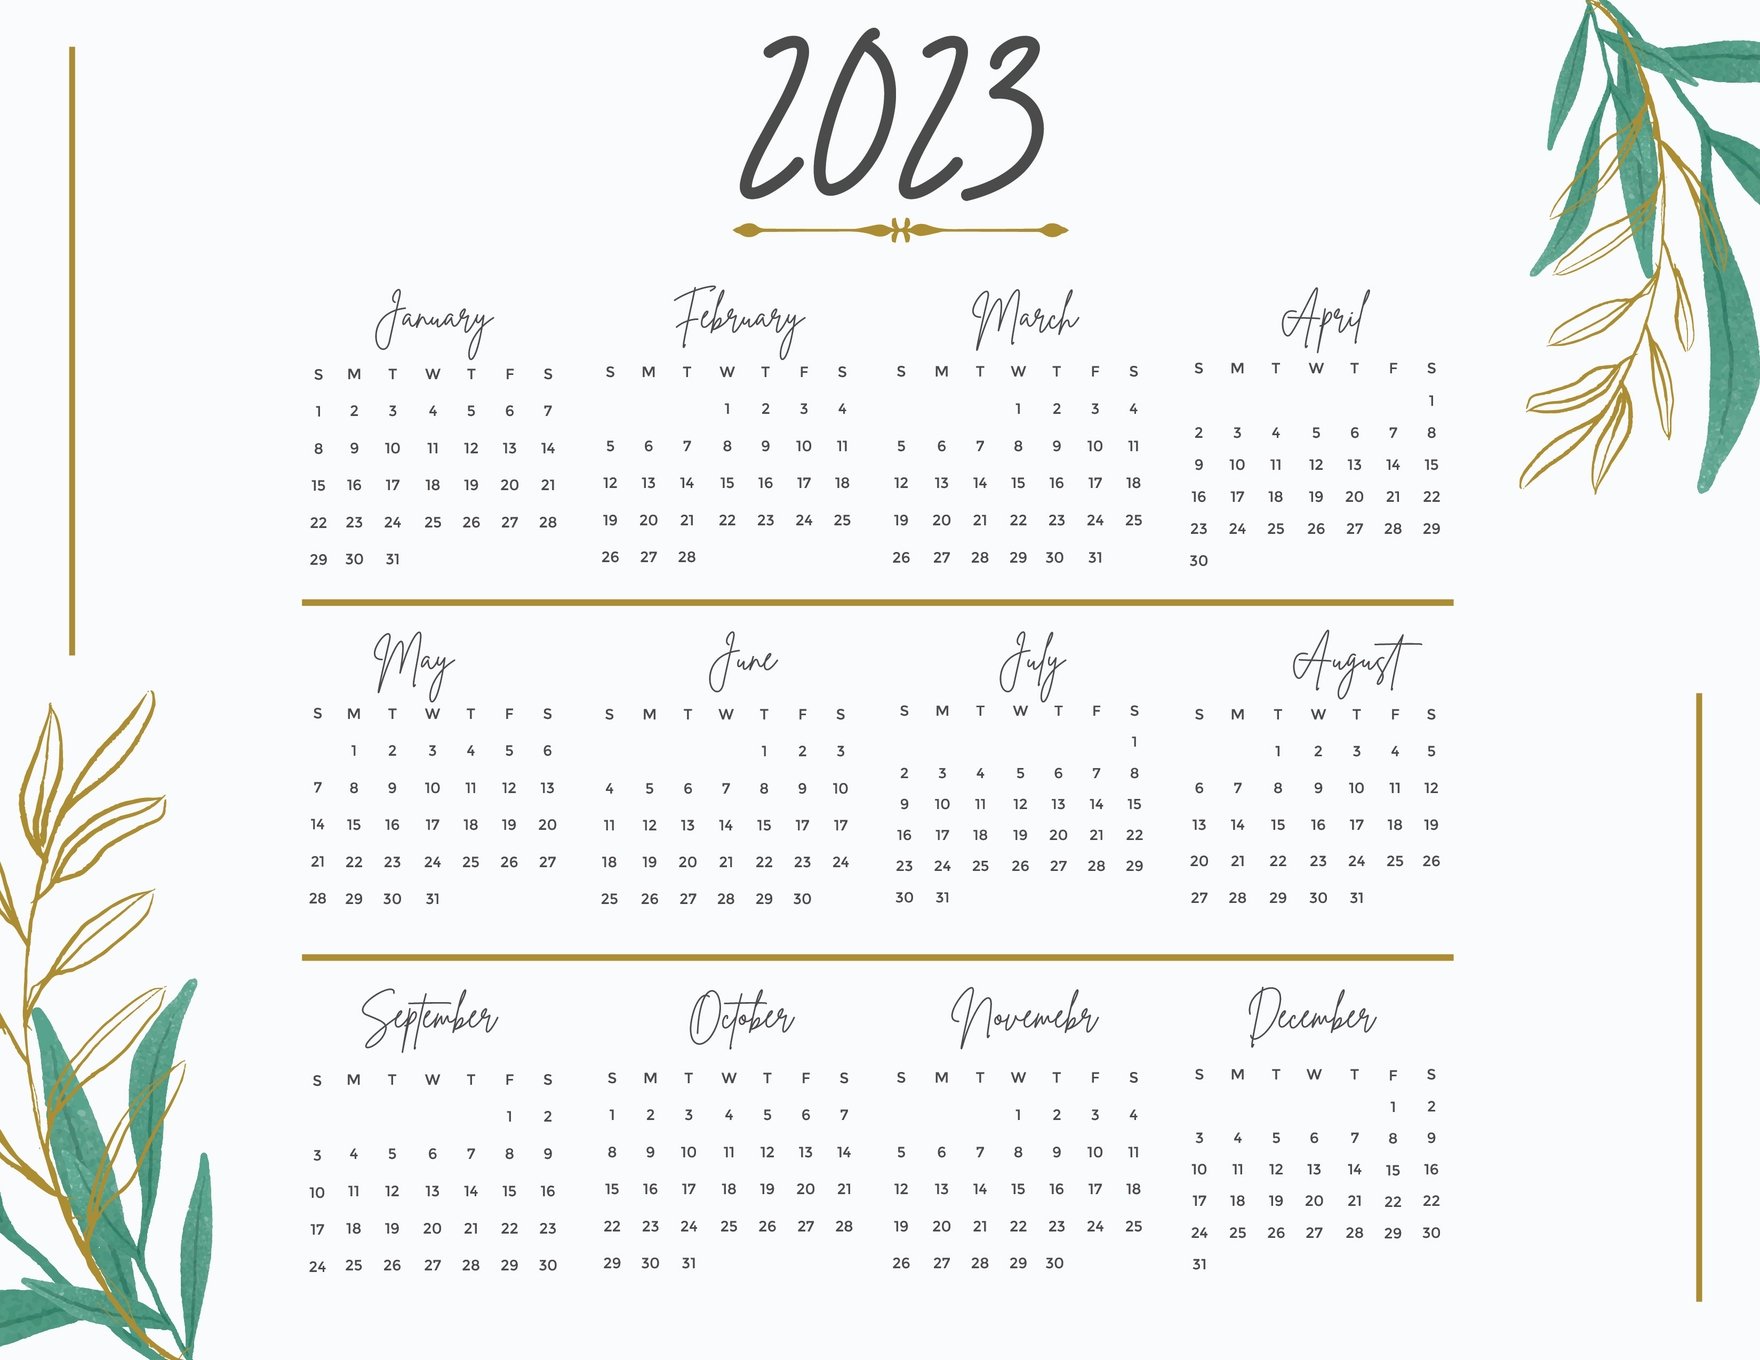 Calligraphy 2023 Calendar in Word, Illustrator, PSD